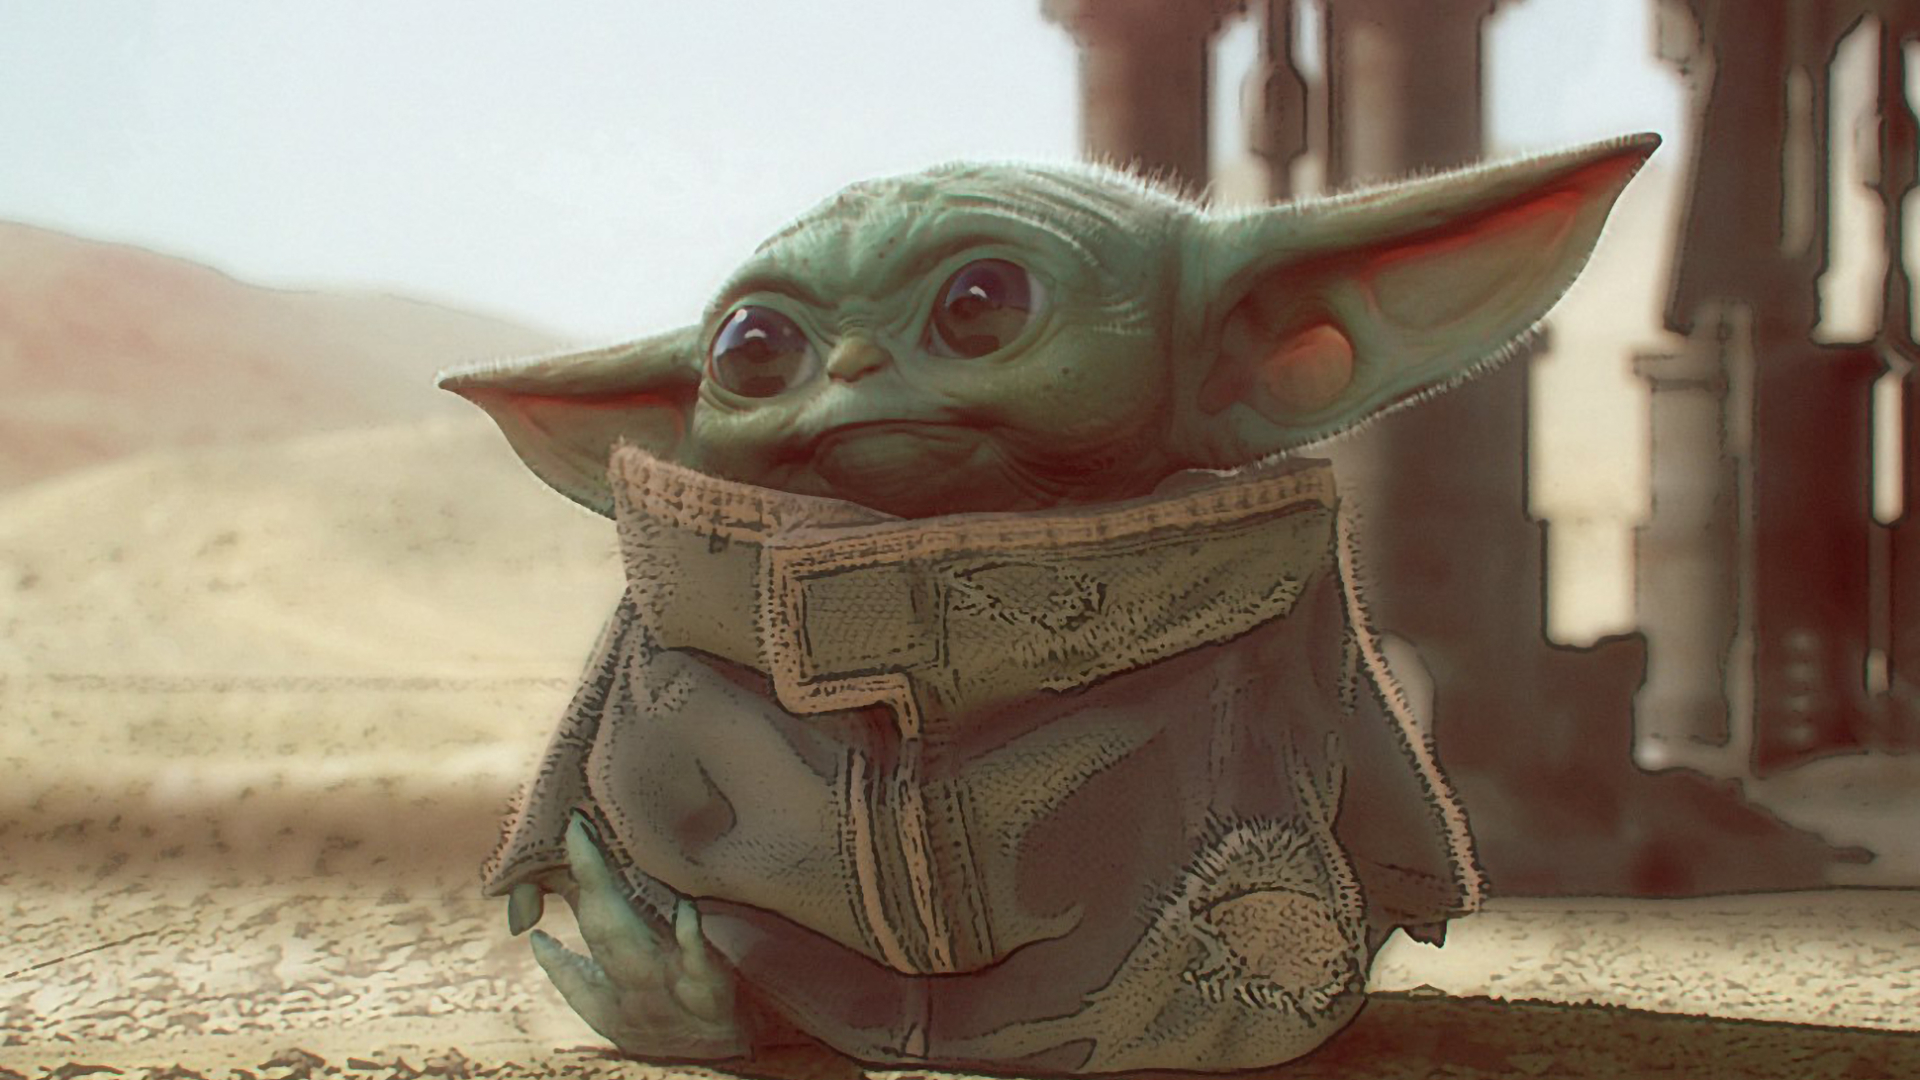 Baby Yoda Ultra Hd Wallpaper